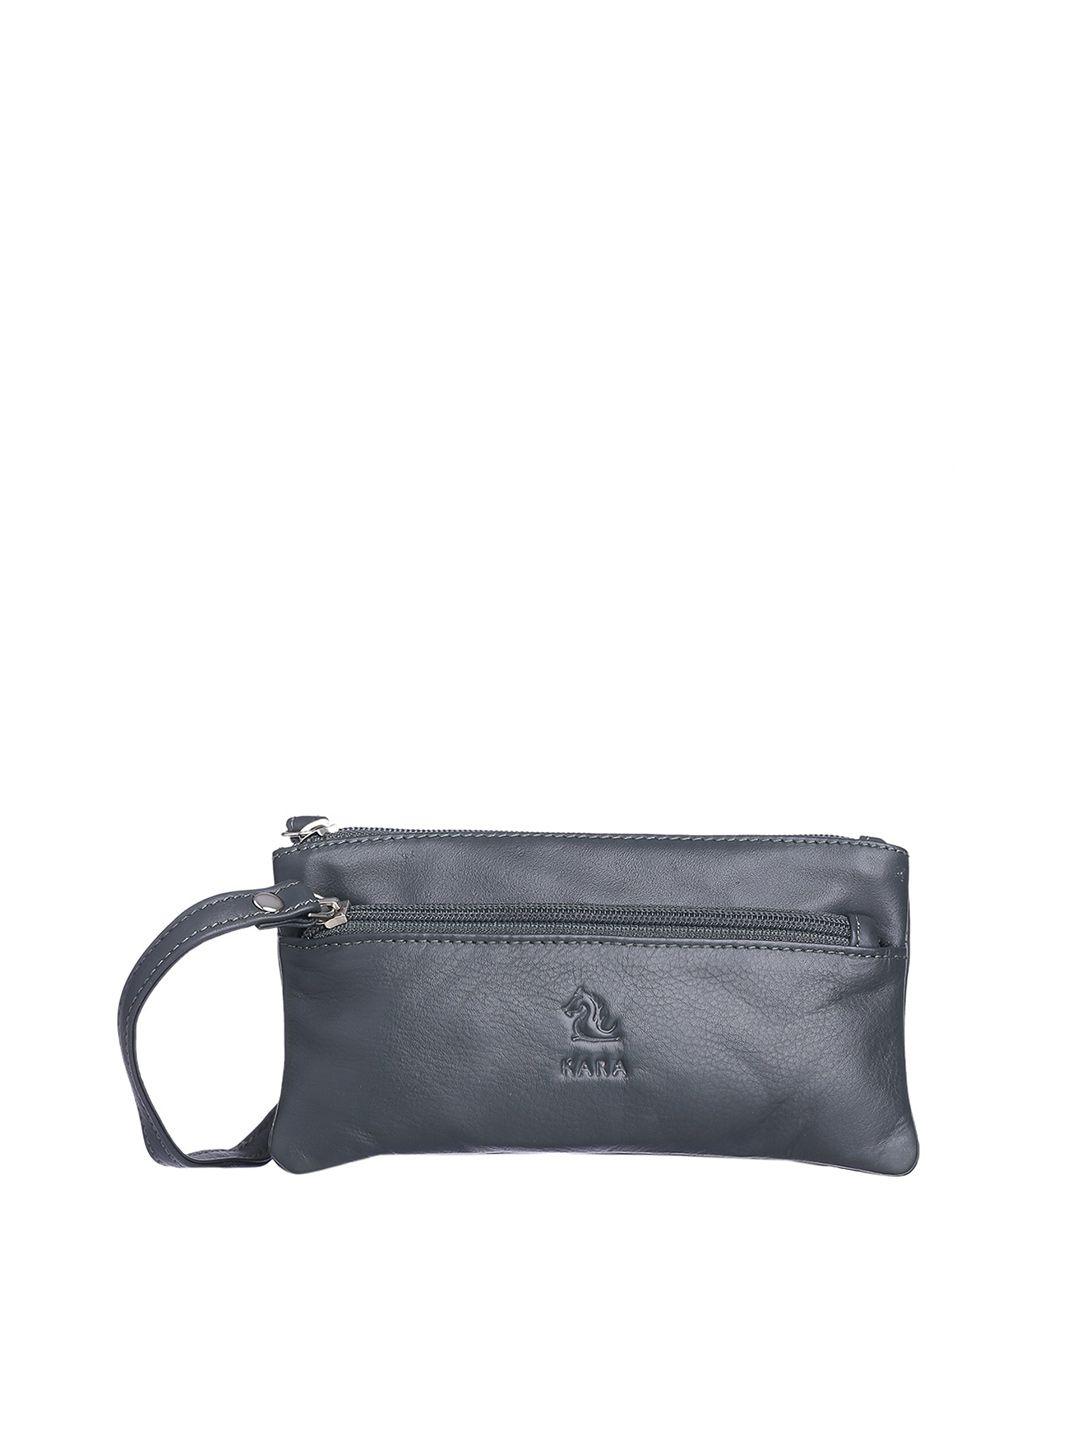 kara leather purse clutch